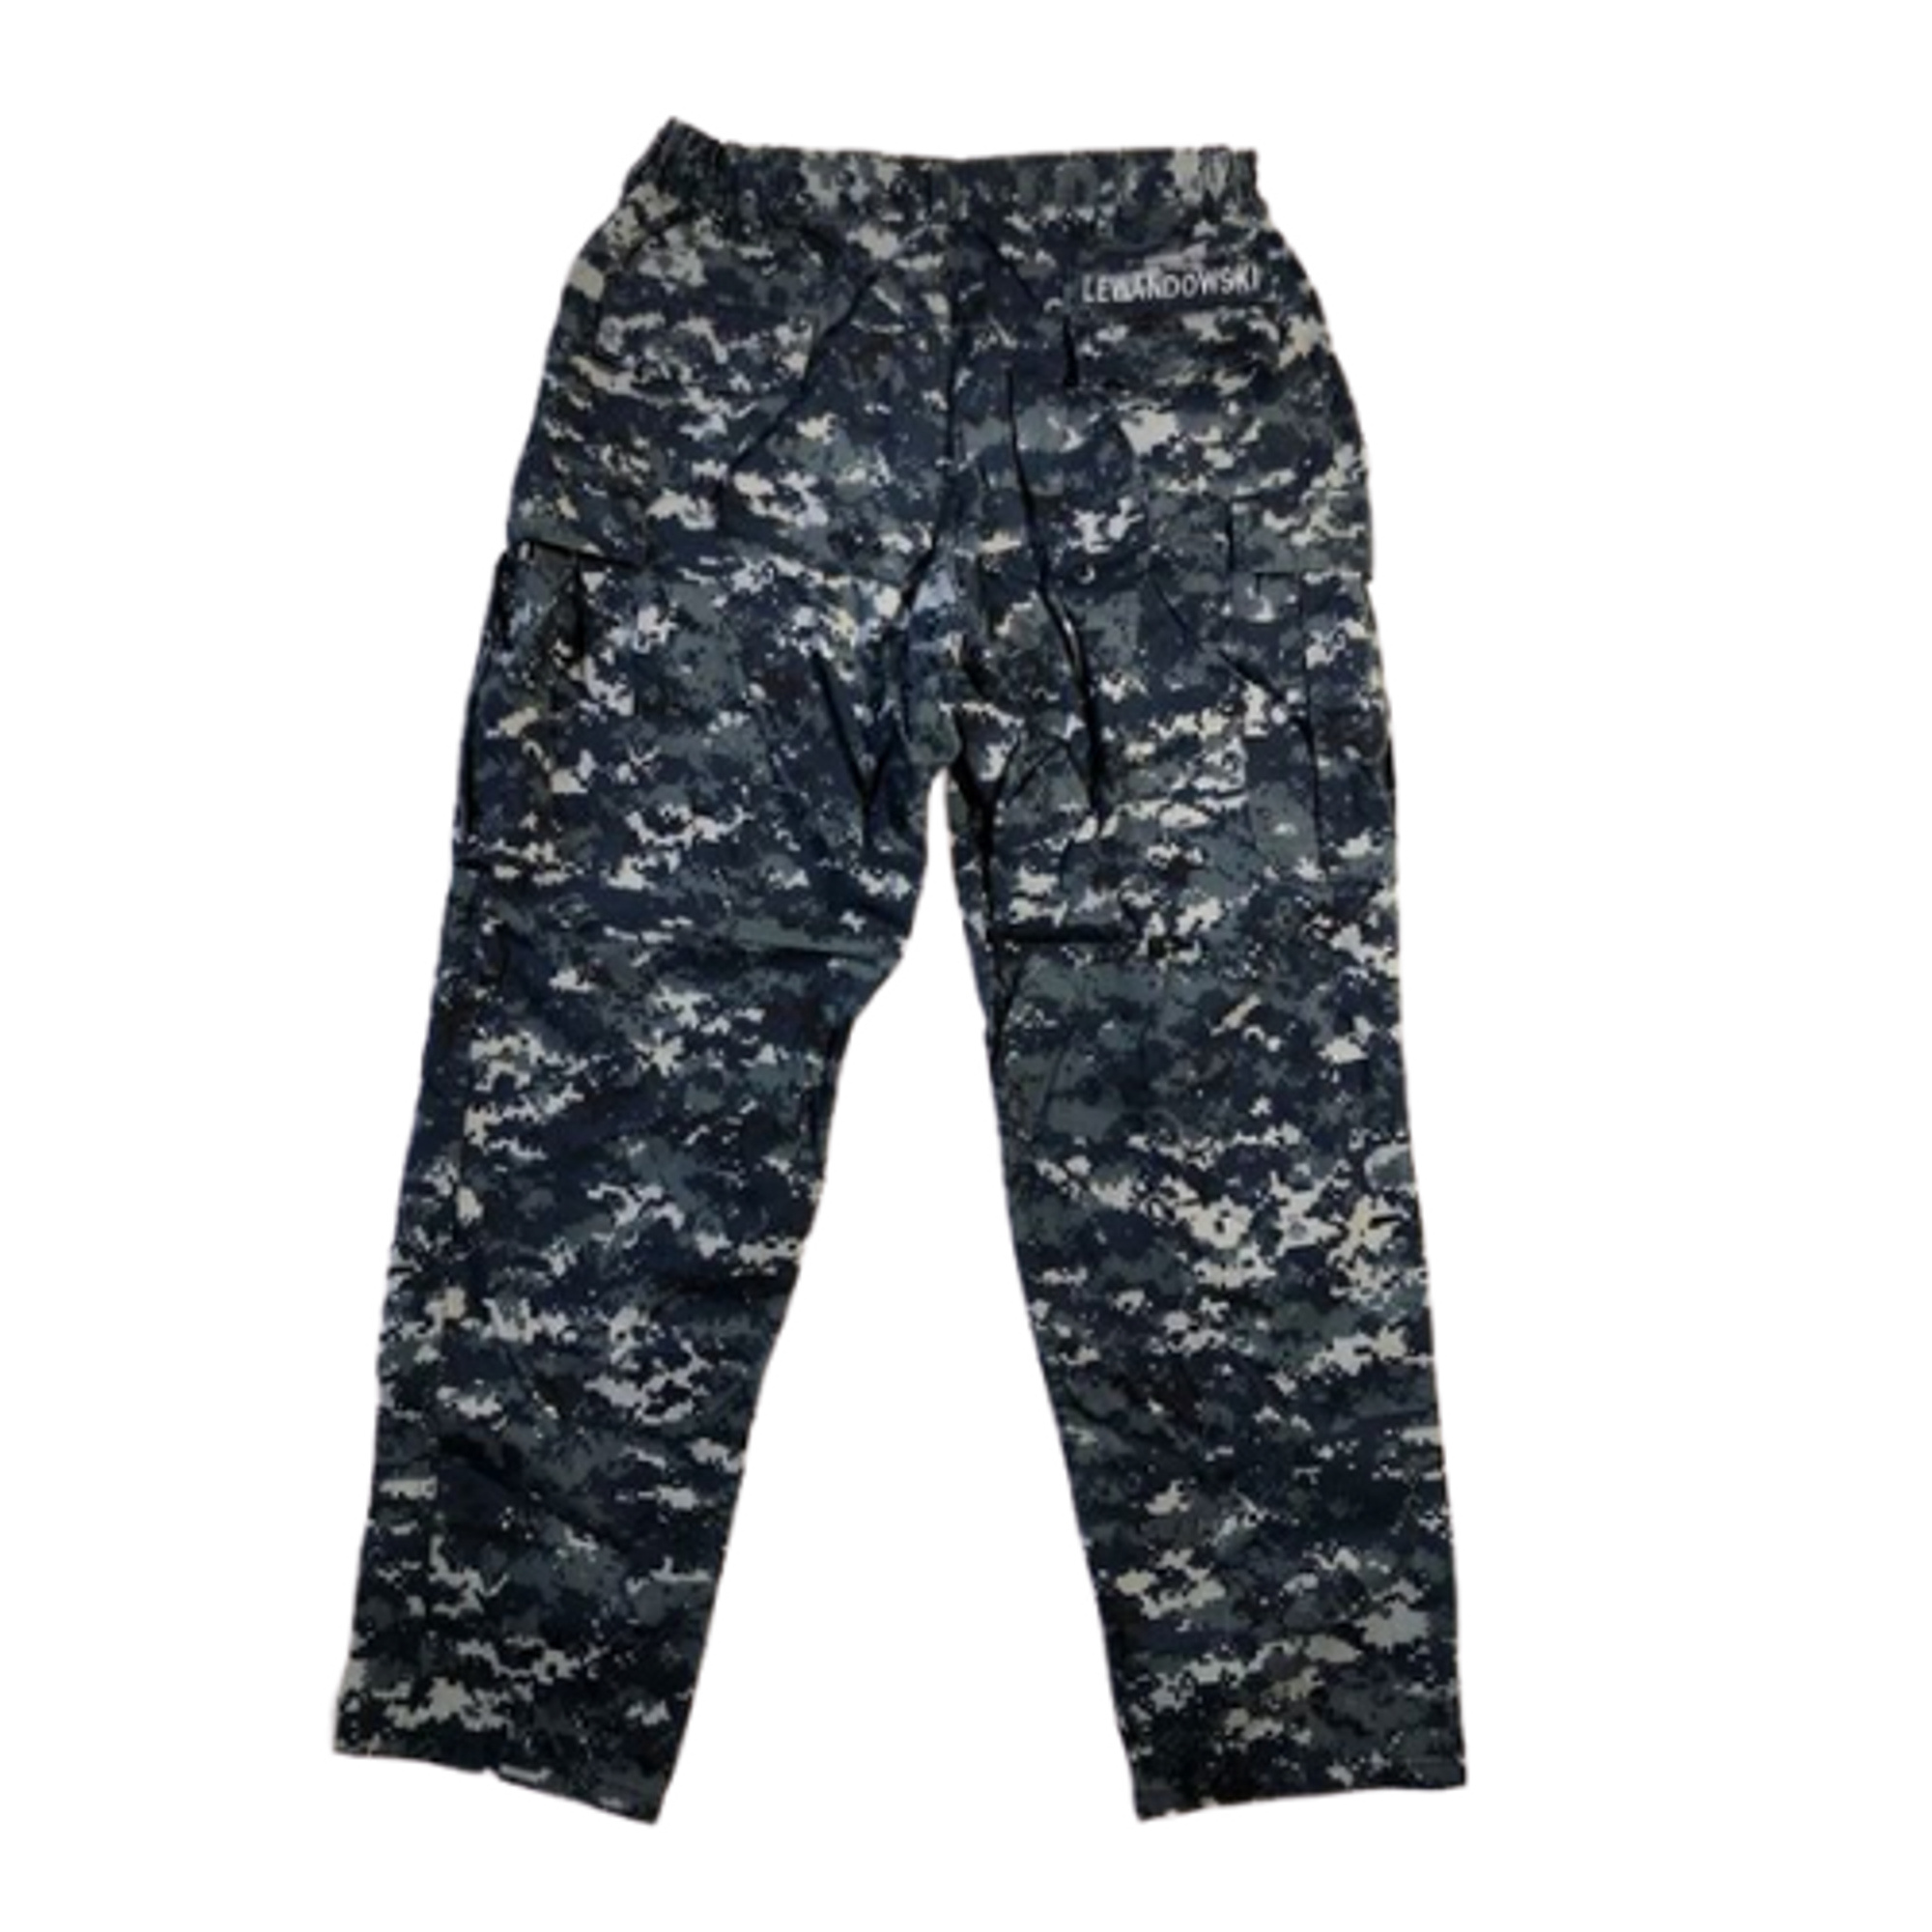 U.S. Armed Forces Naval Digital Camo Pants - X-Large Regular